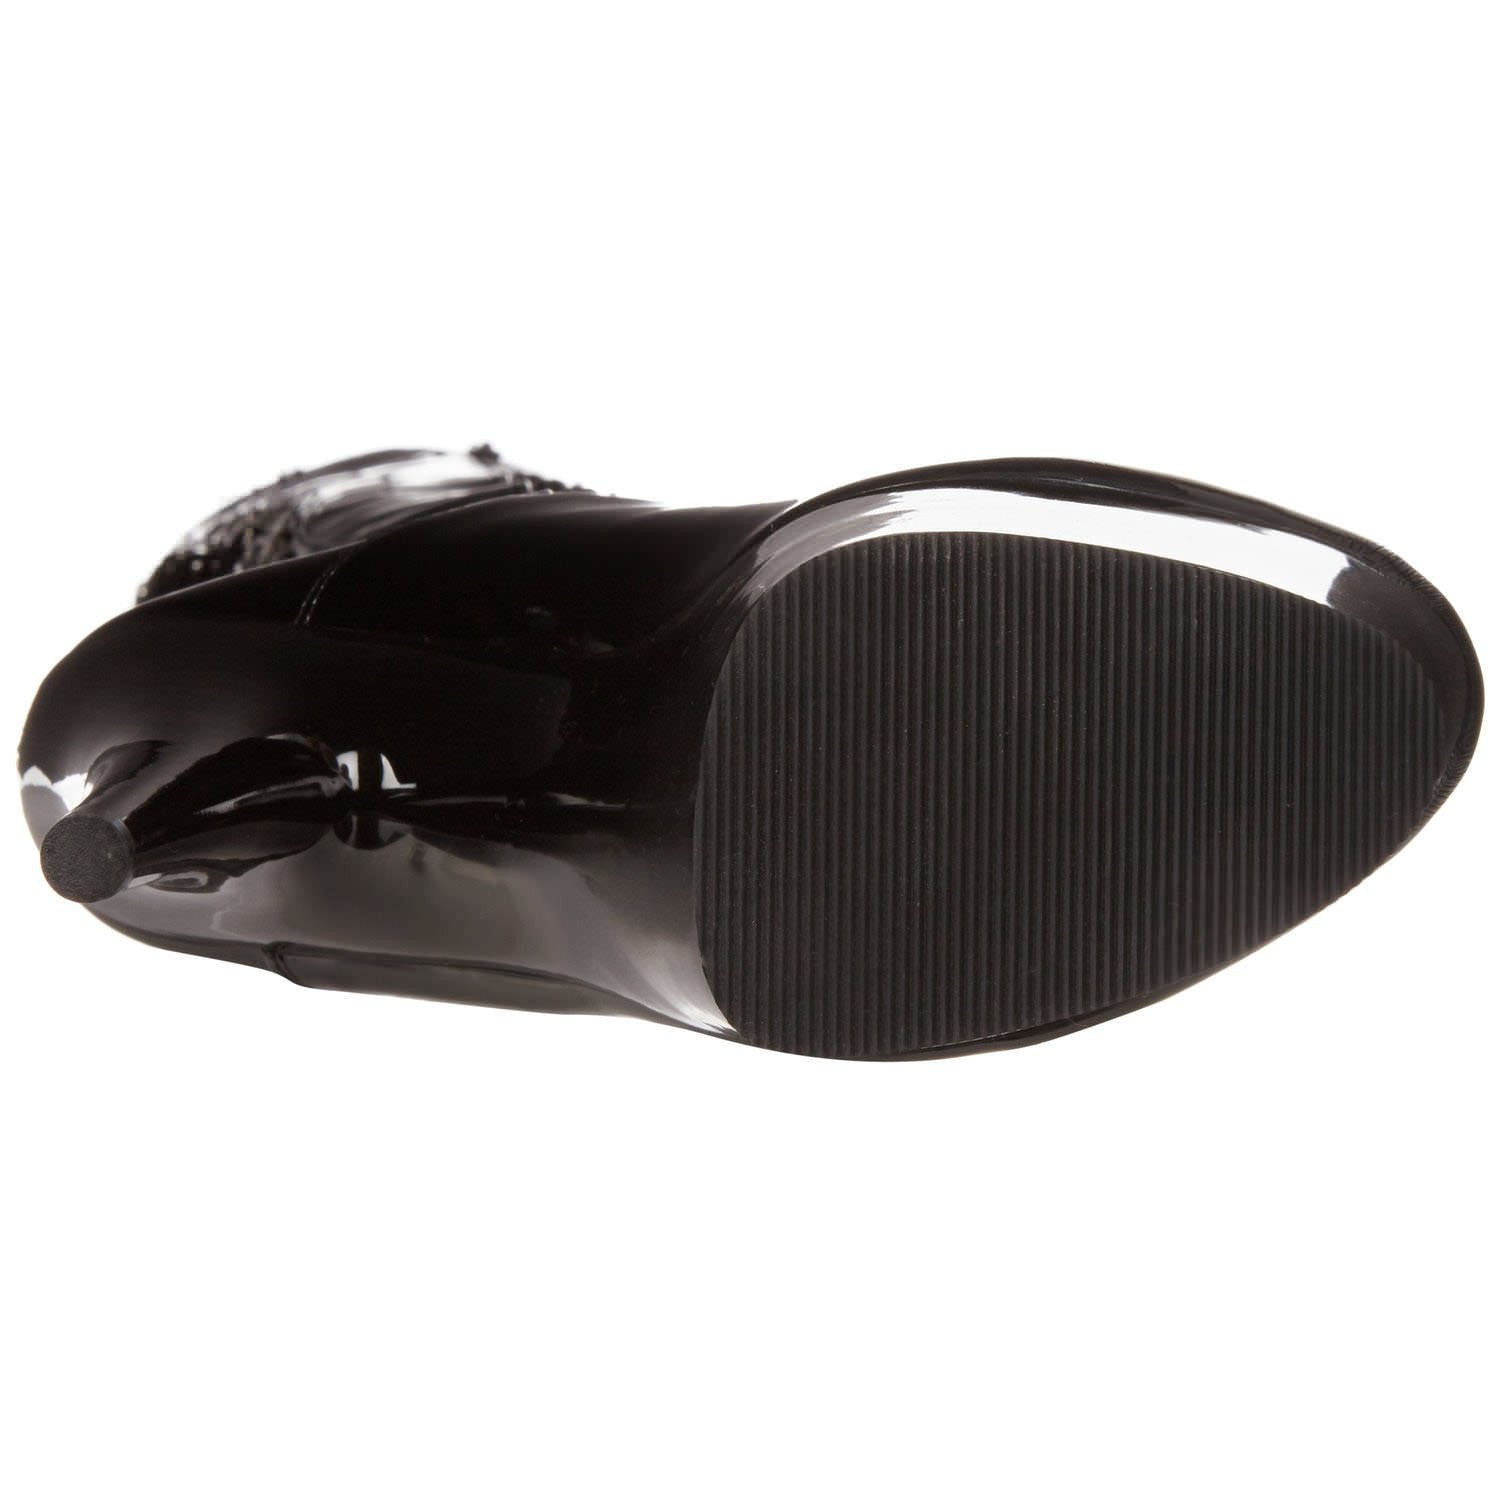 PLEASER ADORE-3063 Black Stretch Pat Thigh High Boots - Shoecup.com - 8